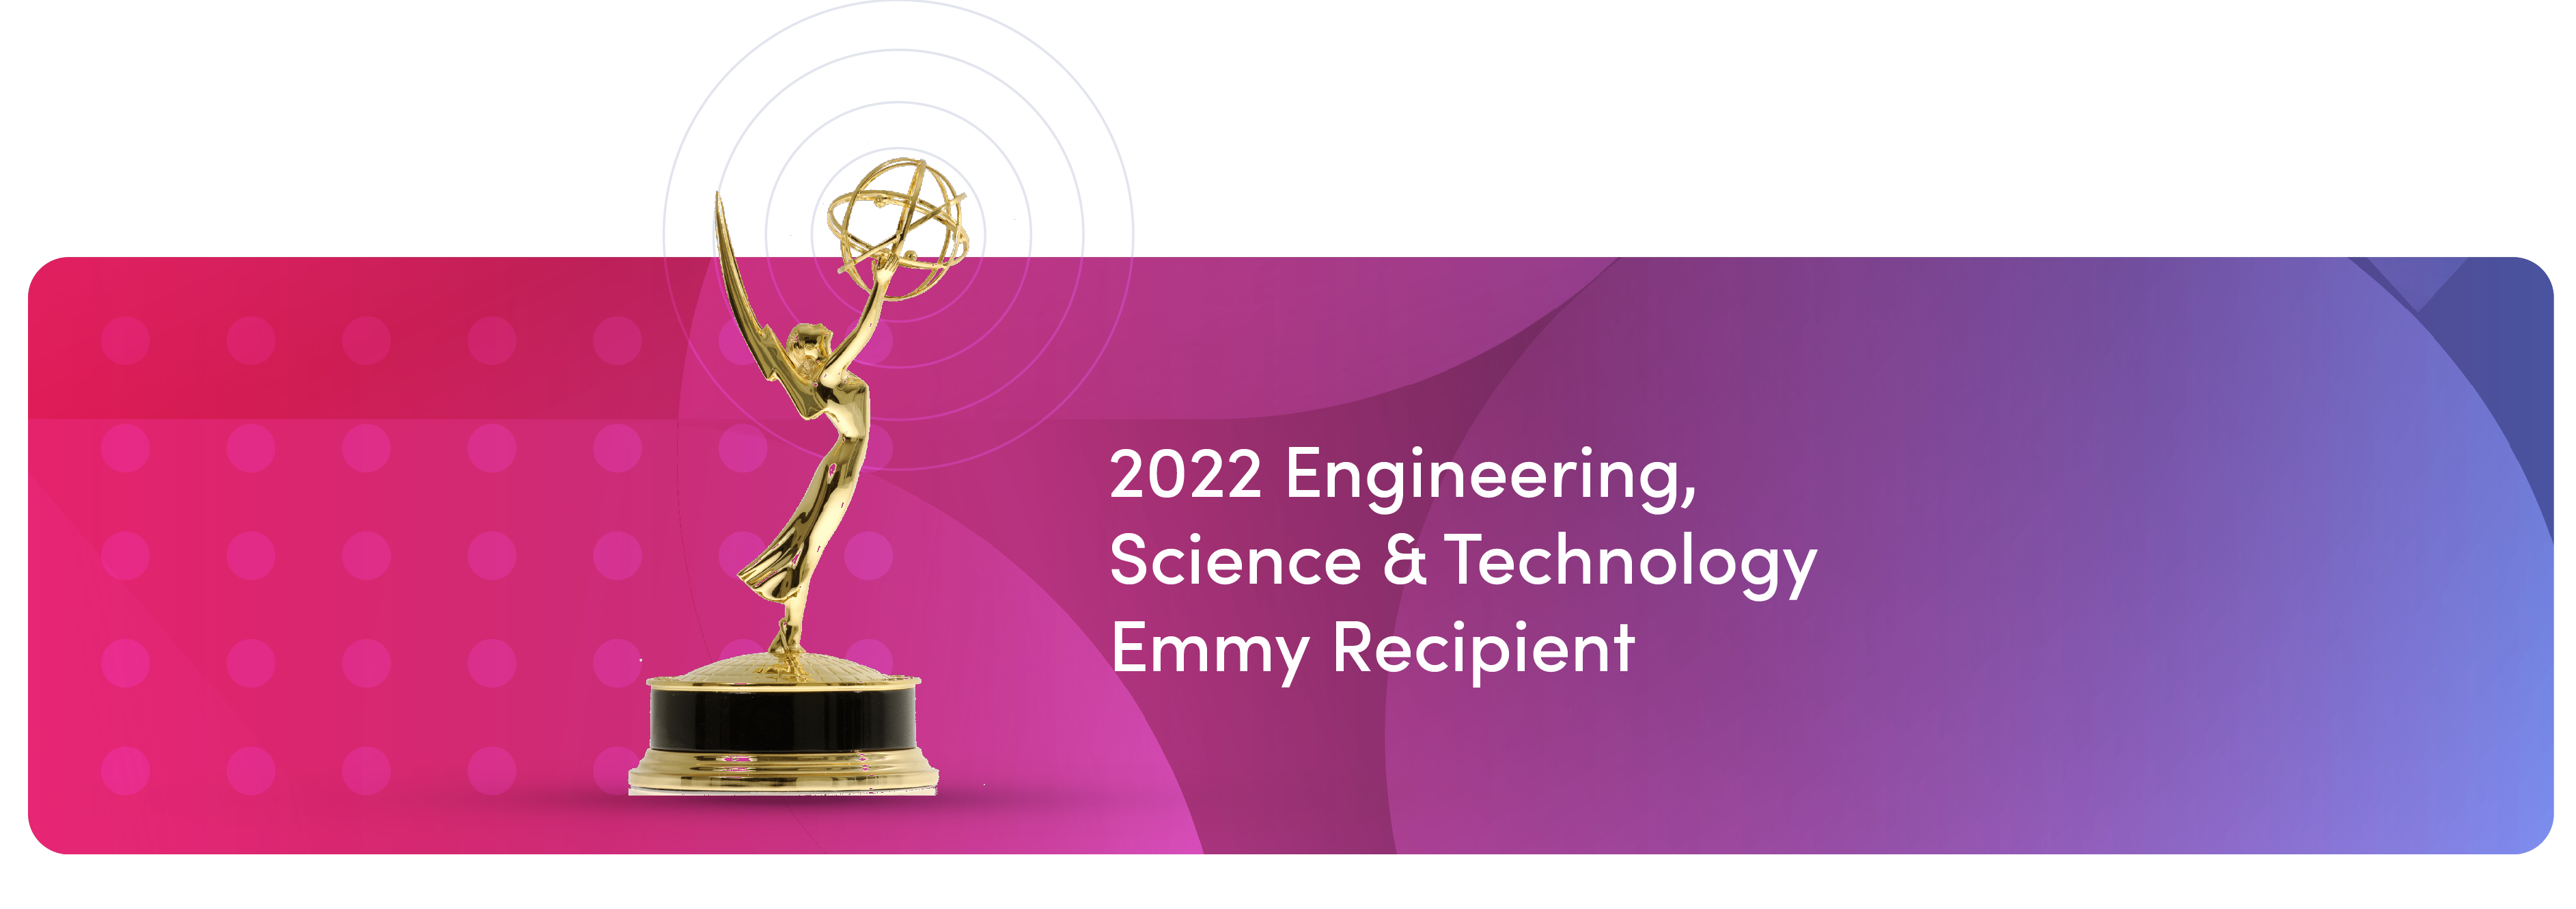 2022 Engineering, Science & Technology Emmy Recipient.